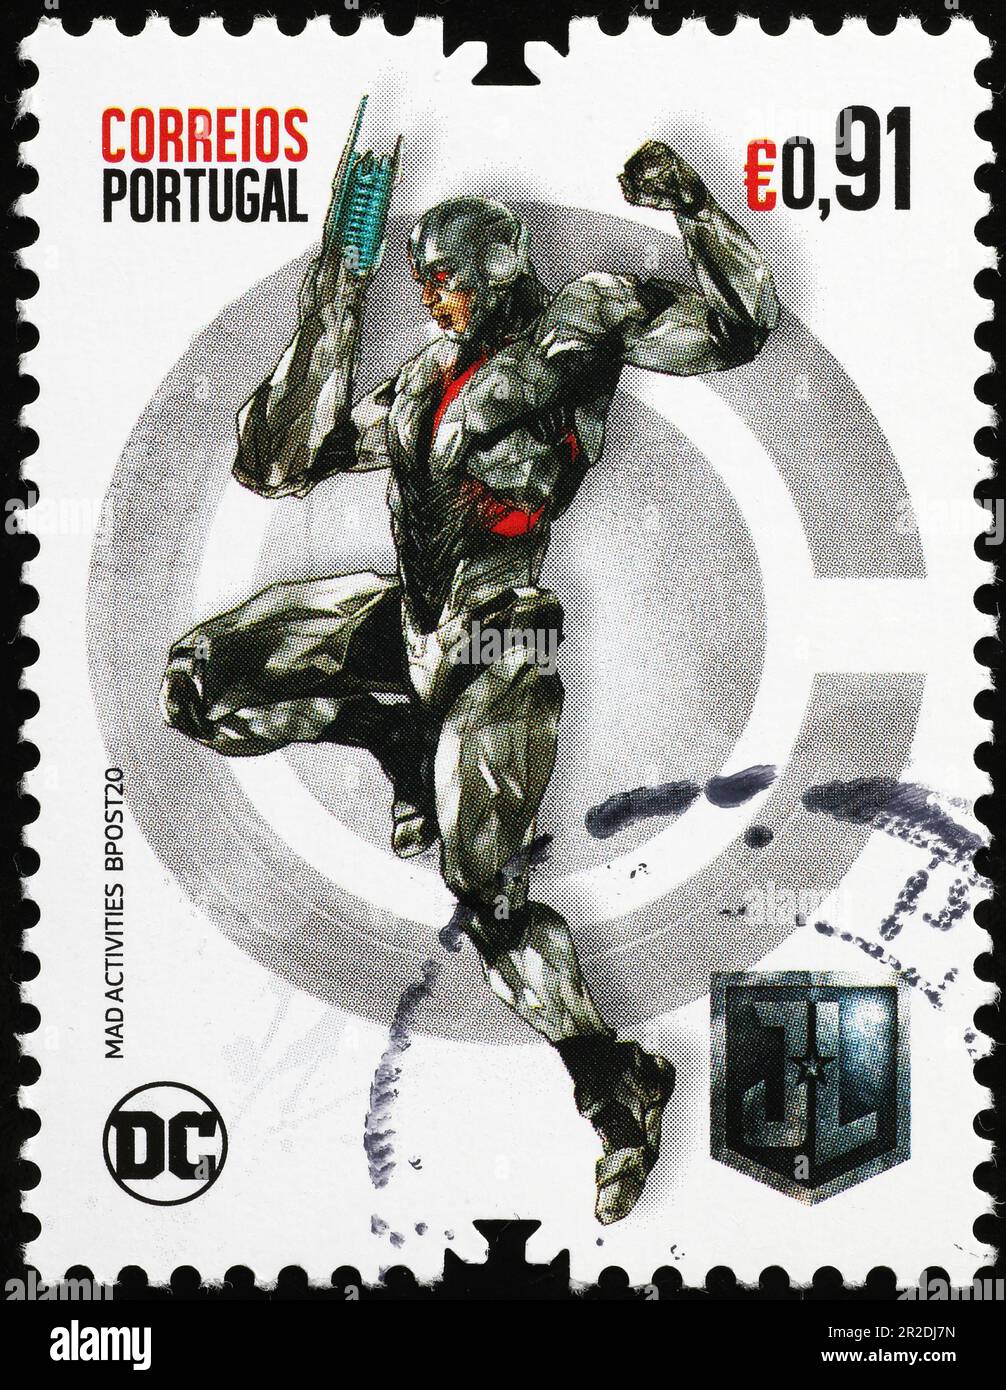 Superhero Cyborg on portuguese postage stamp Stock Photo